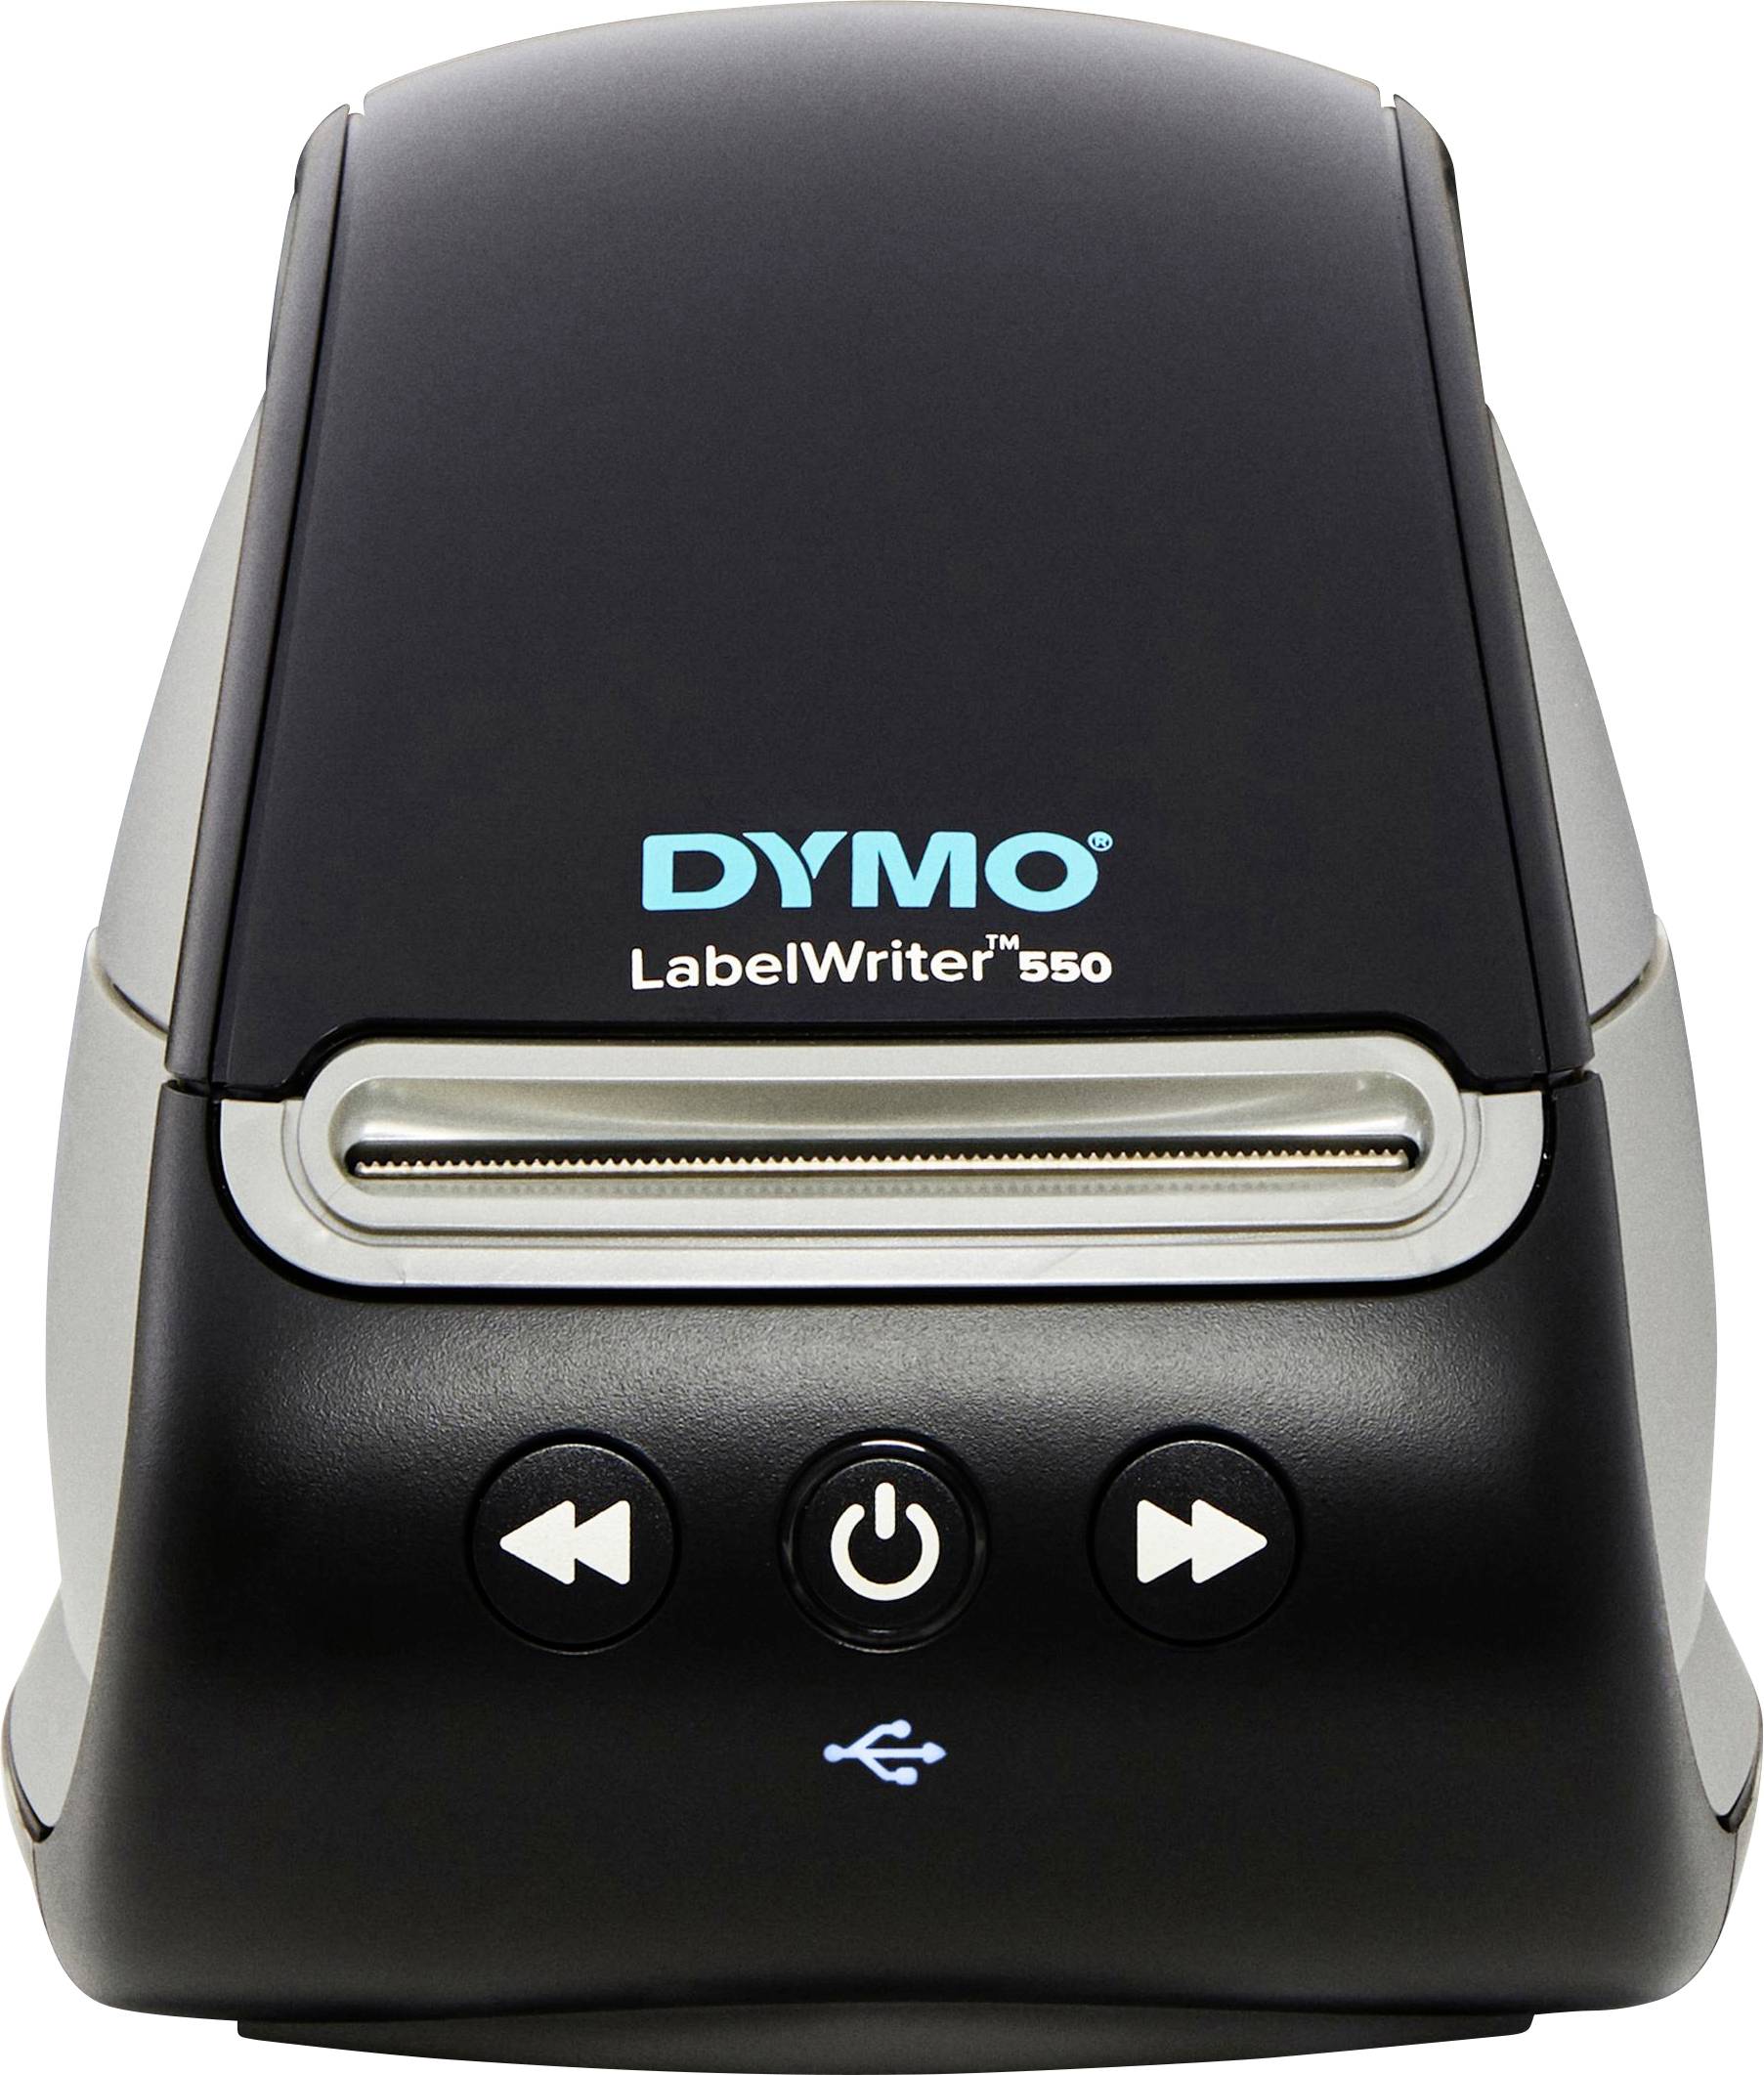 dymo labelwriter 400 turbo drivers windows 10